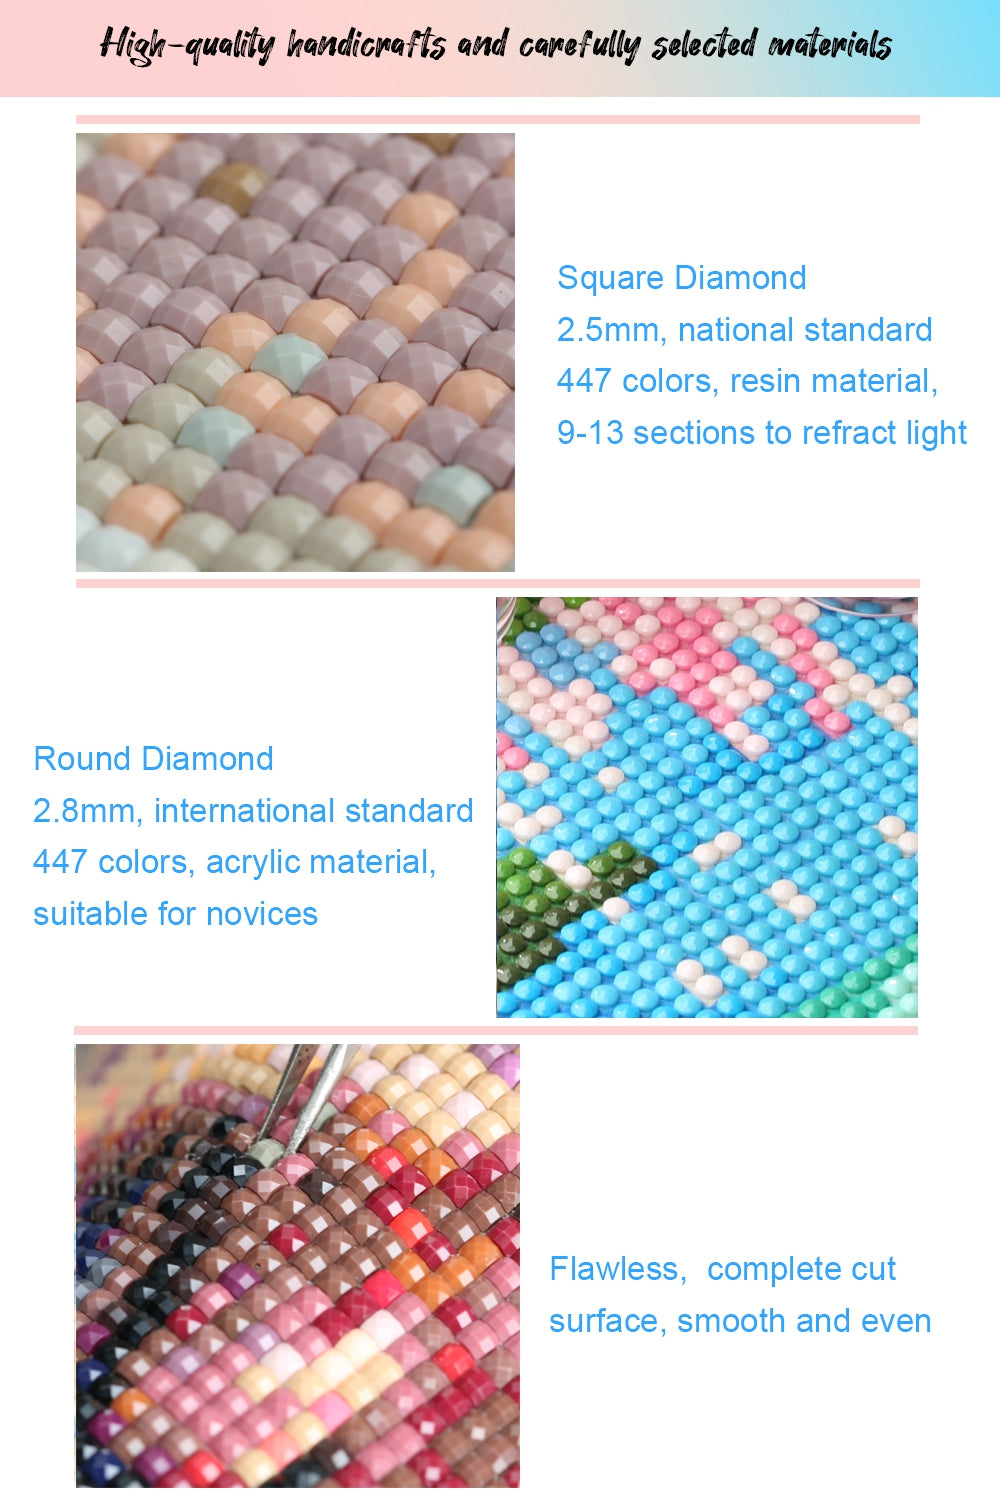 Custom Diamond Painting Kit - Full Drill – Paw Roll